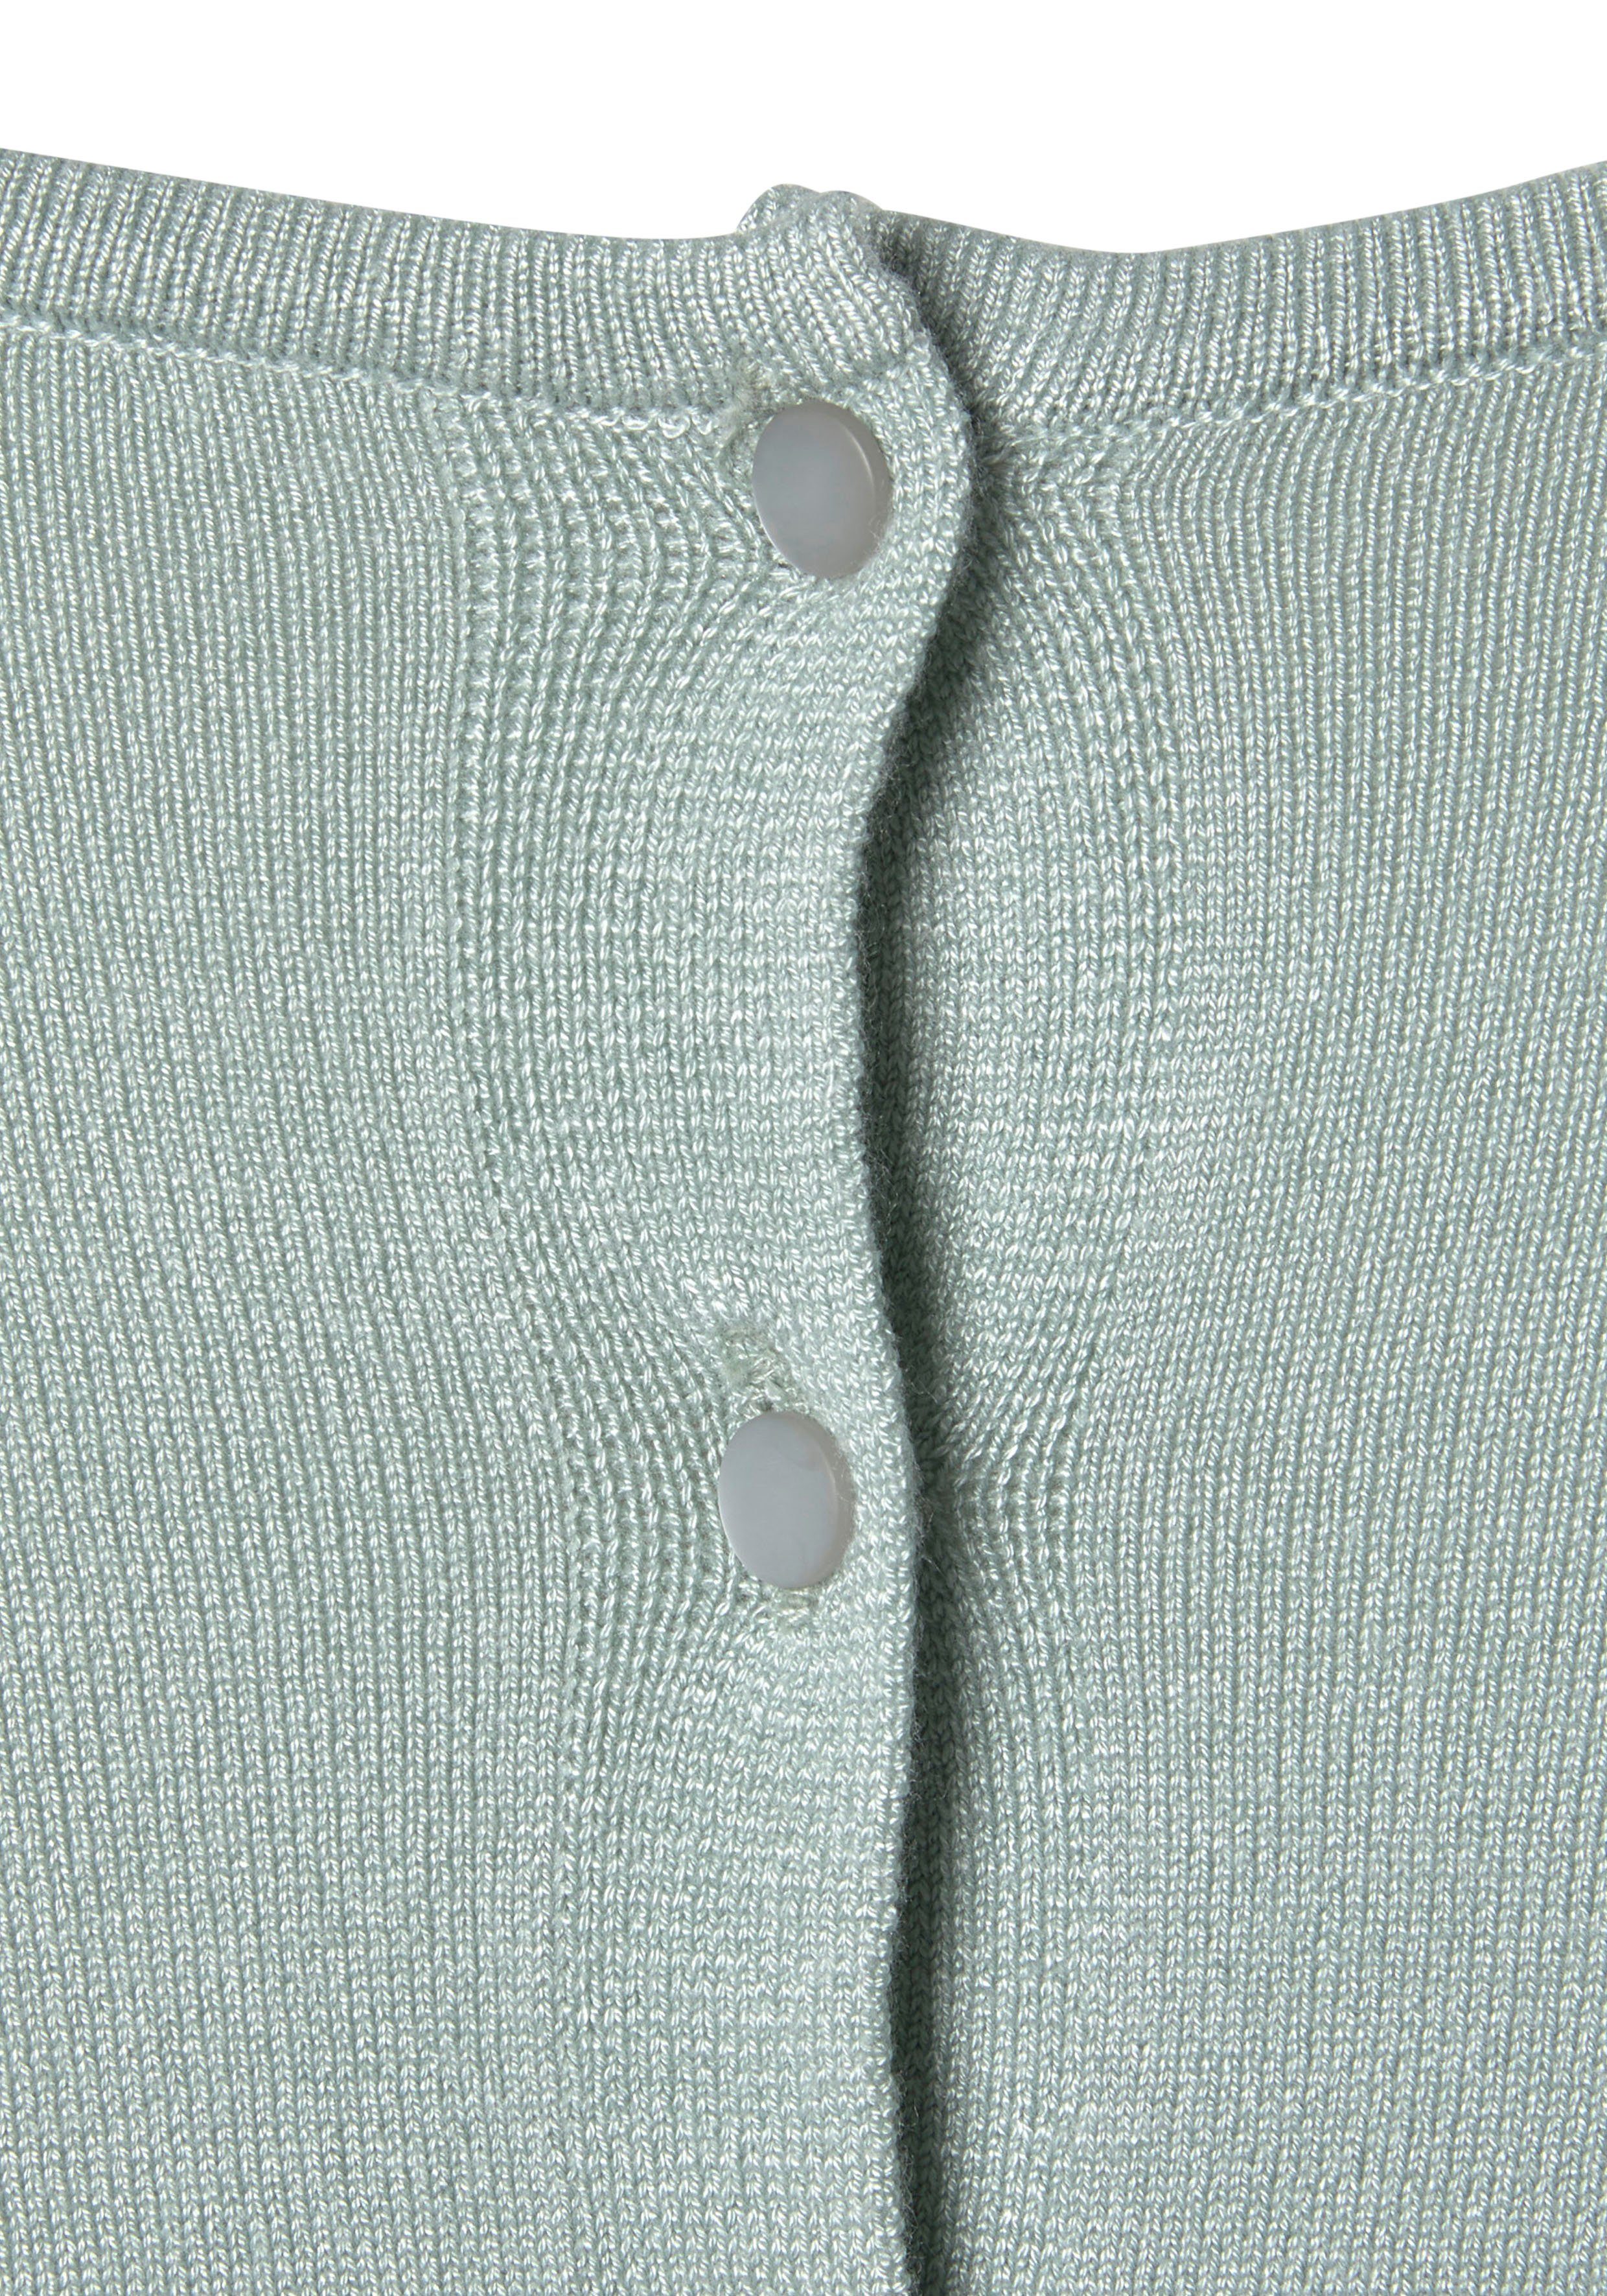 Vivance Kurzarmpullover tragbar, Feinstrickqualität beidseitig 3/4-Pullover, Knopfleiste, hellgrün mit